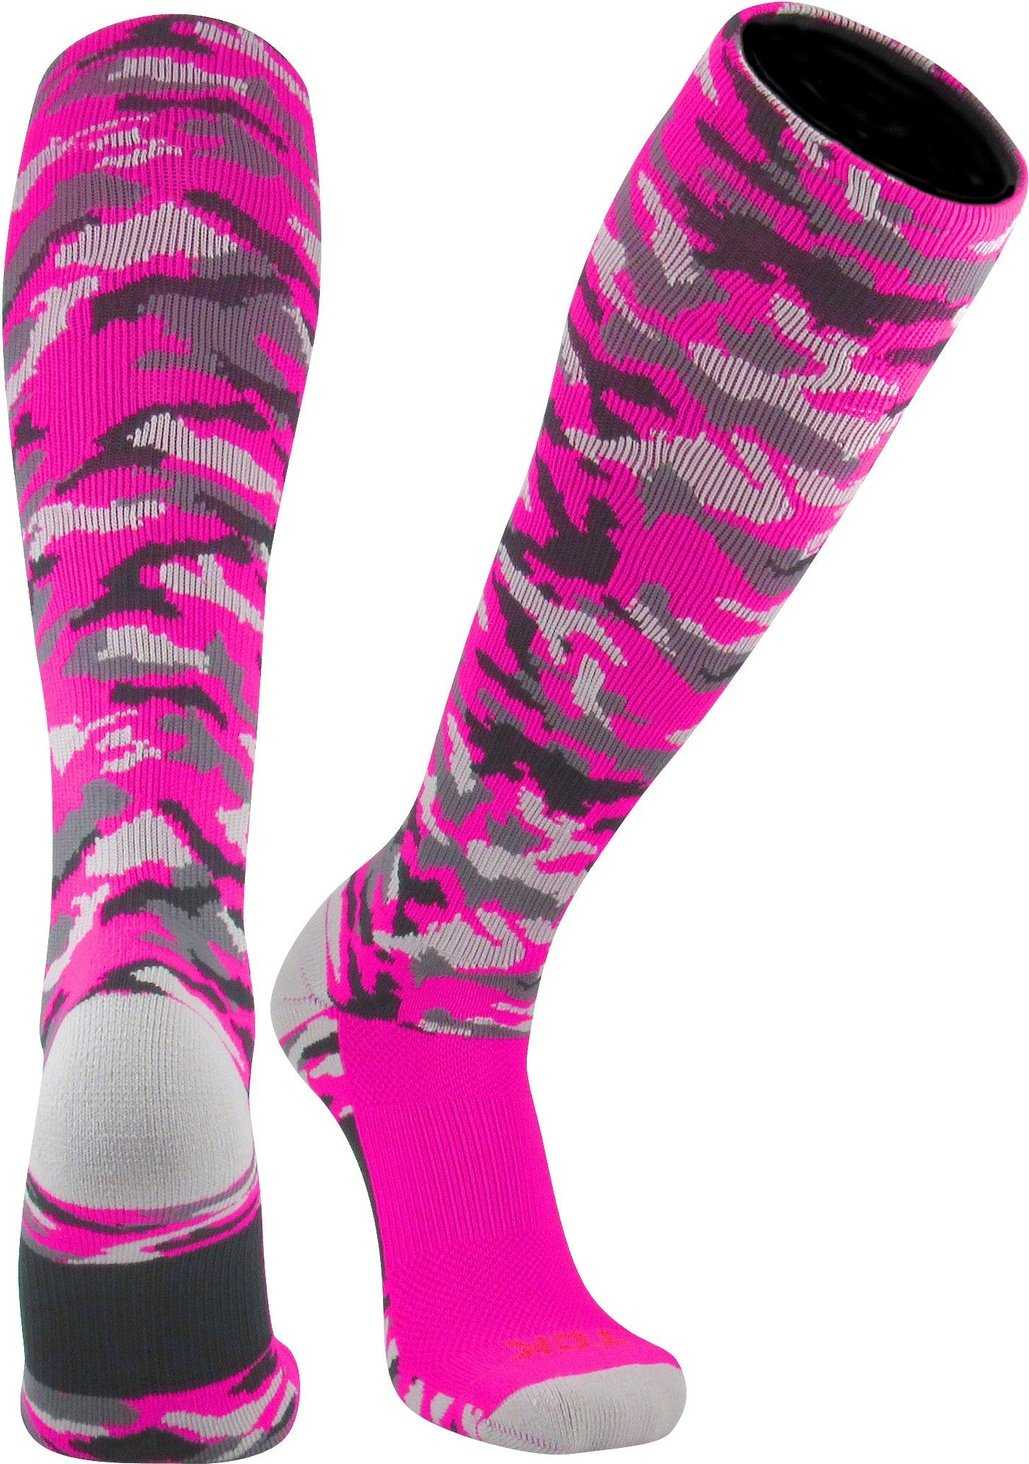 TCK Woodland Camo Knee High Socks - Hot Pink Camo - HIT a Double